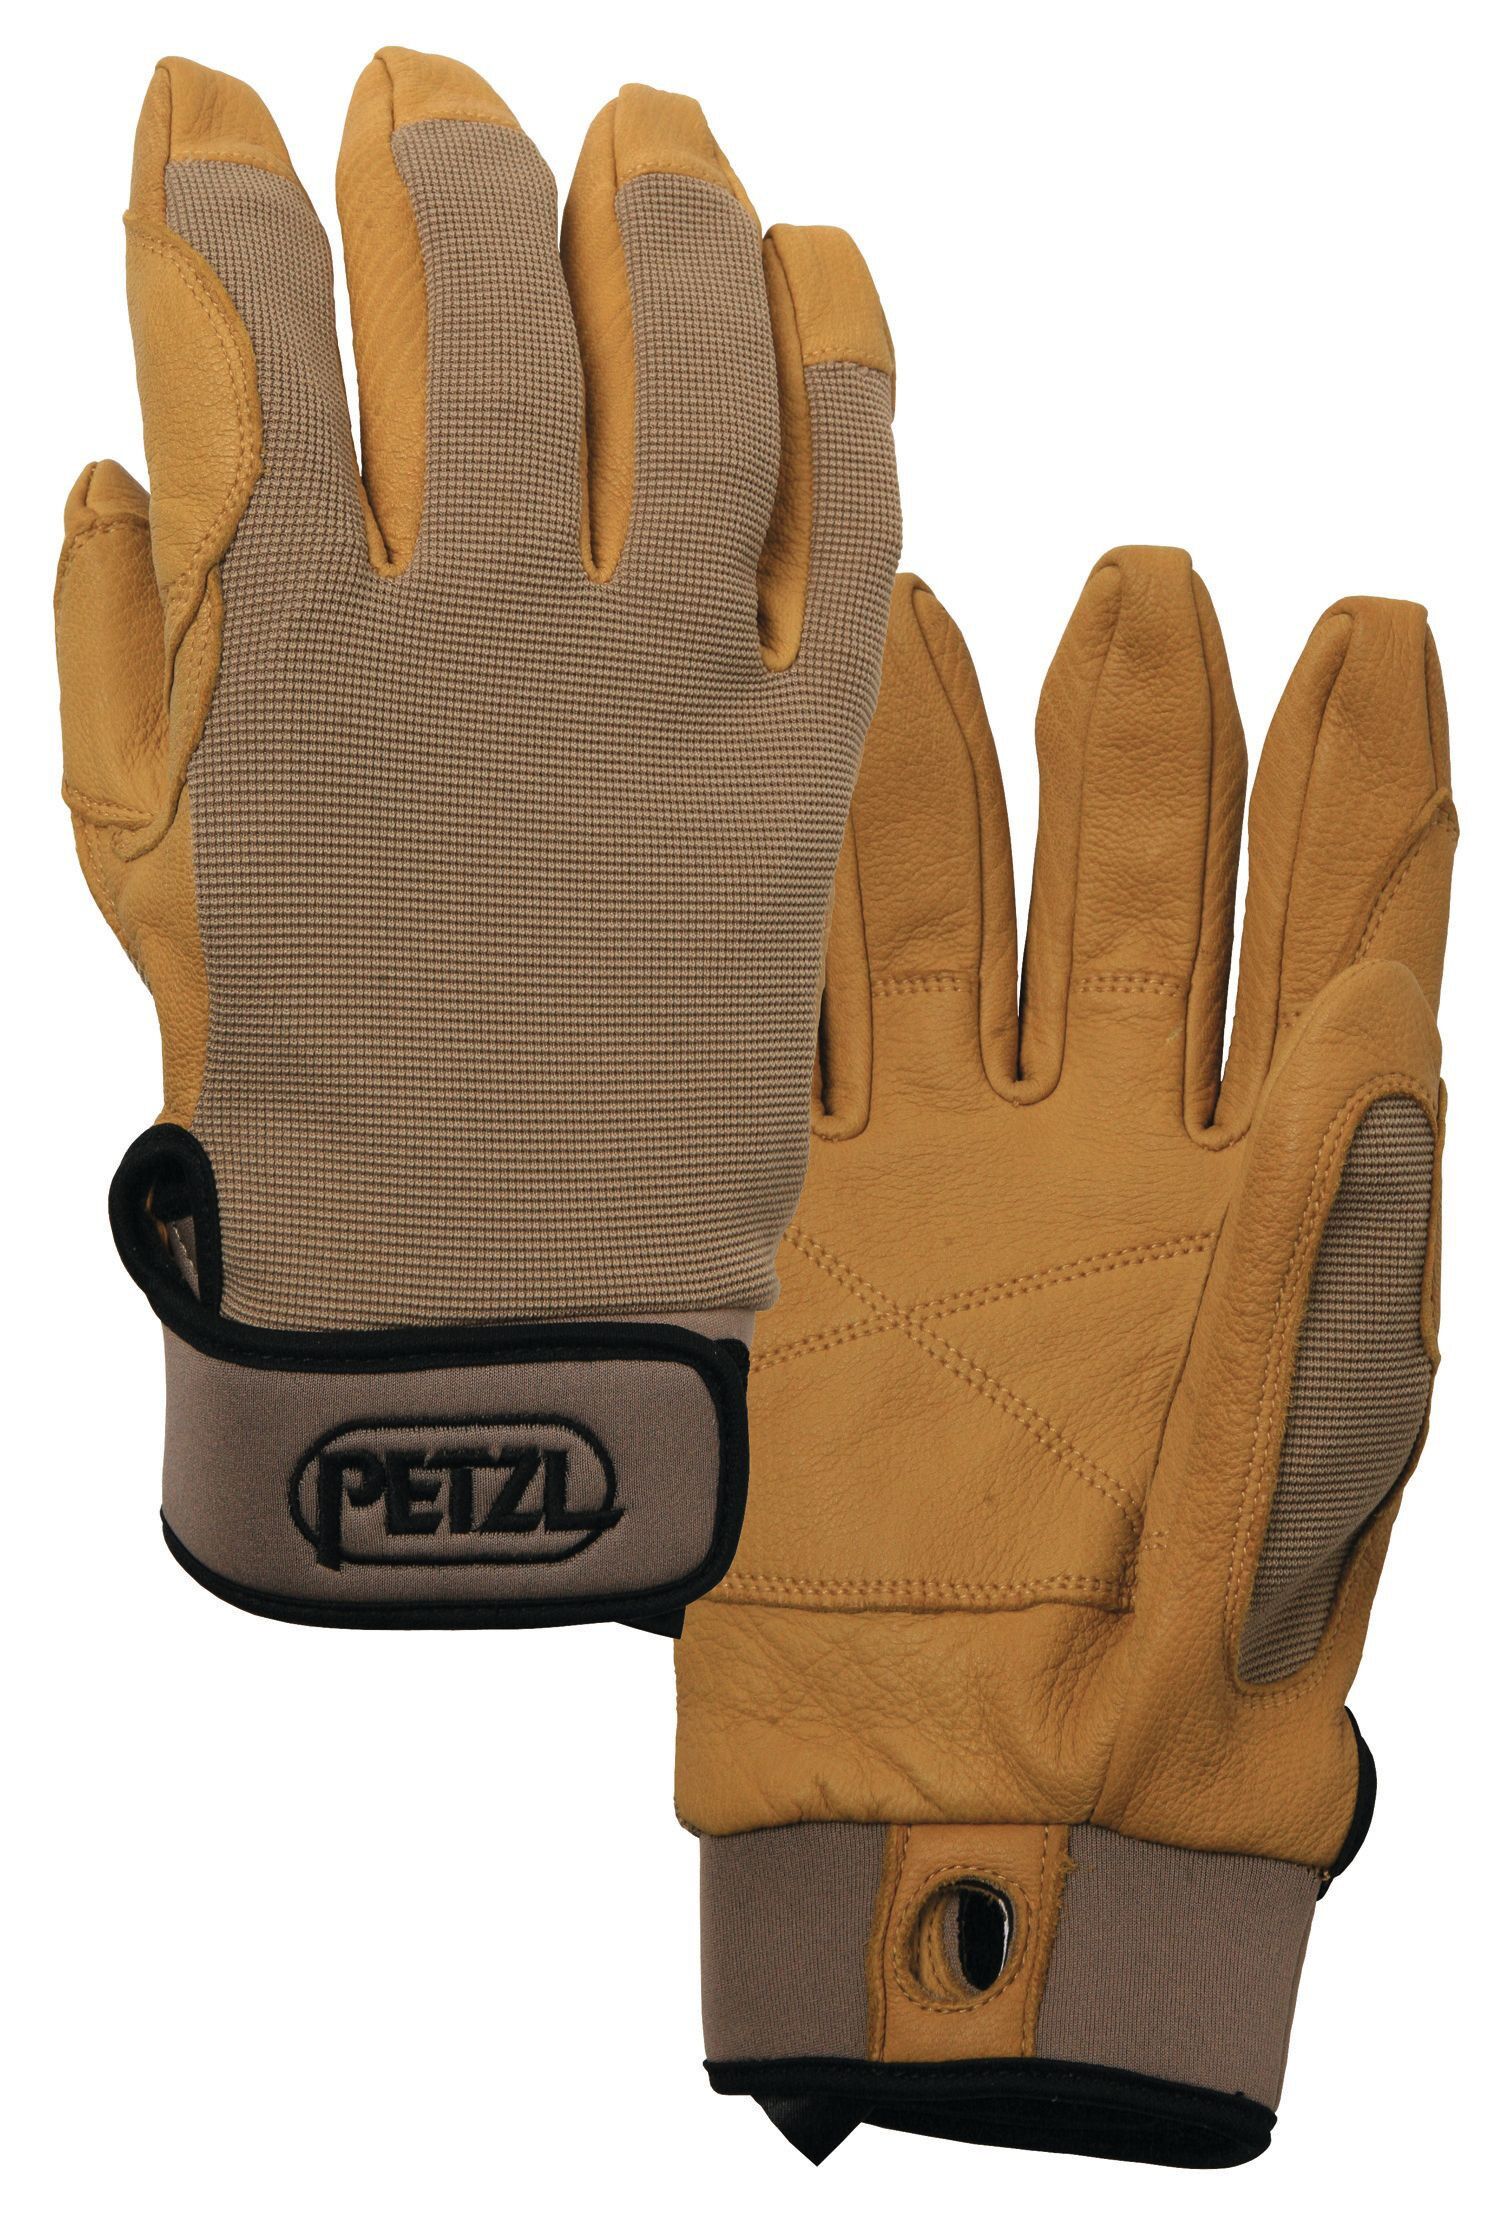 Petzl - Cordex - Climbing gloves